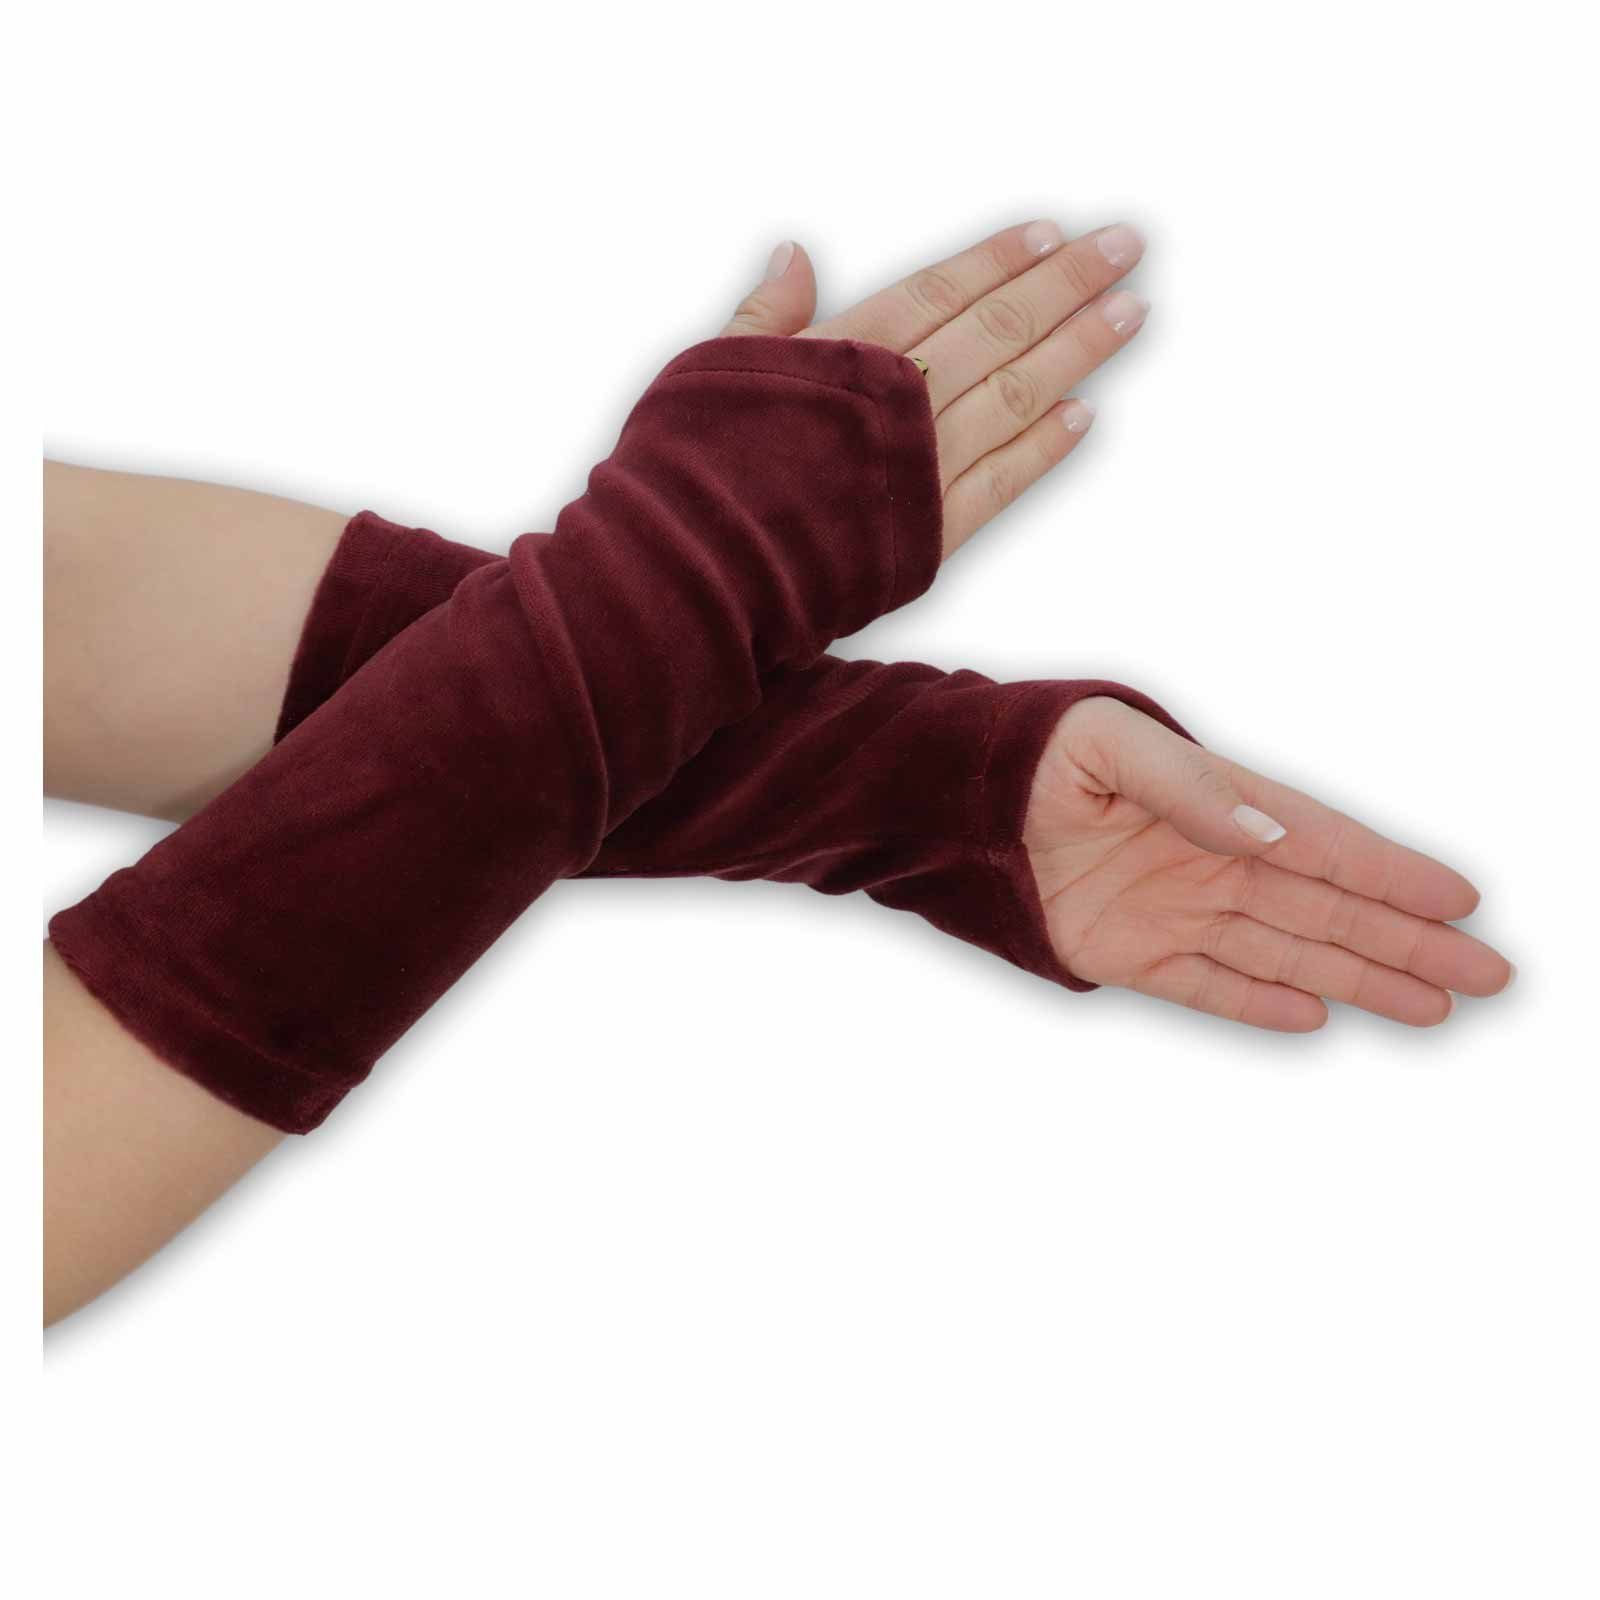 UND Handwärmer MAGIE Glöckchen + Handschuhe KUNST Armstulpen Armstulpen Stulpen Damen Samt Bordeaux Boho